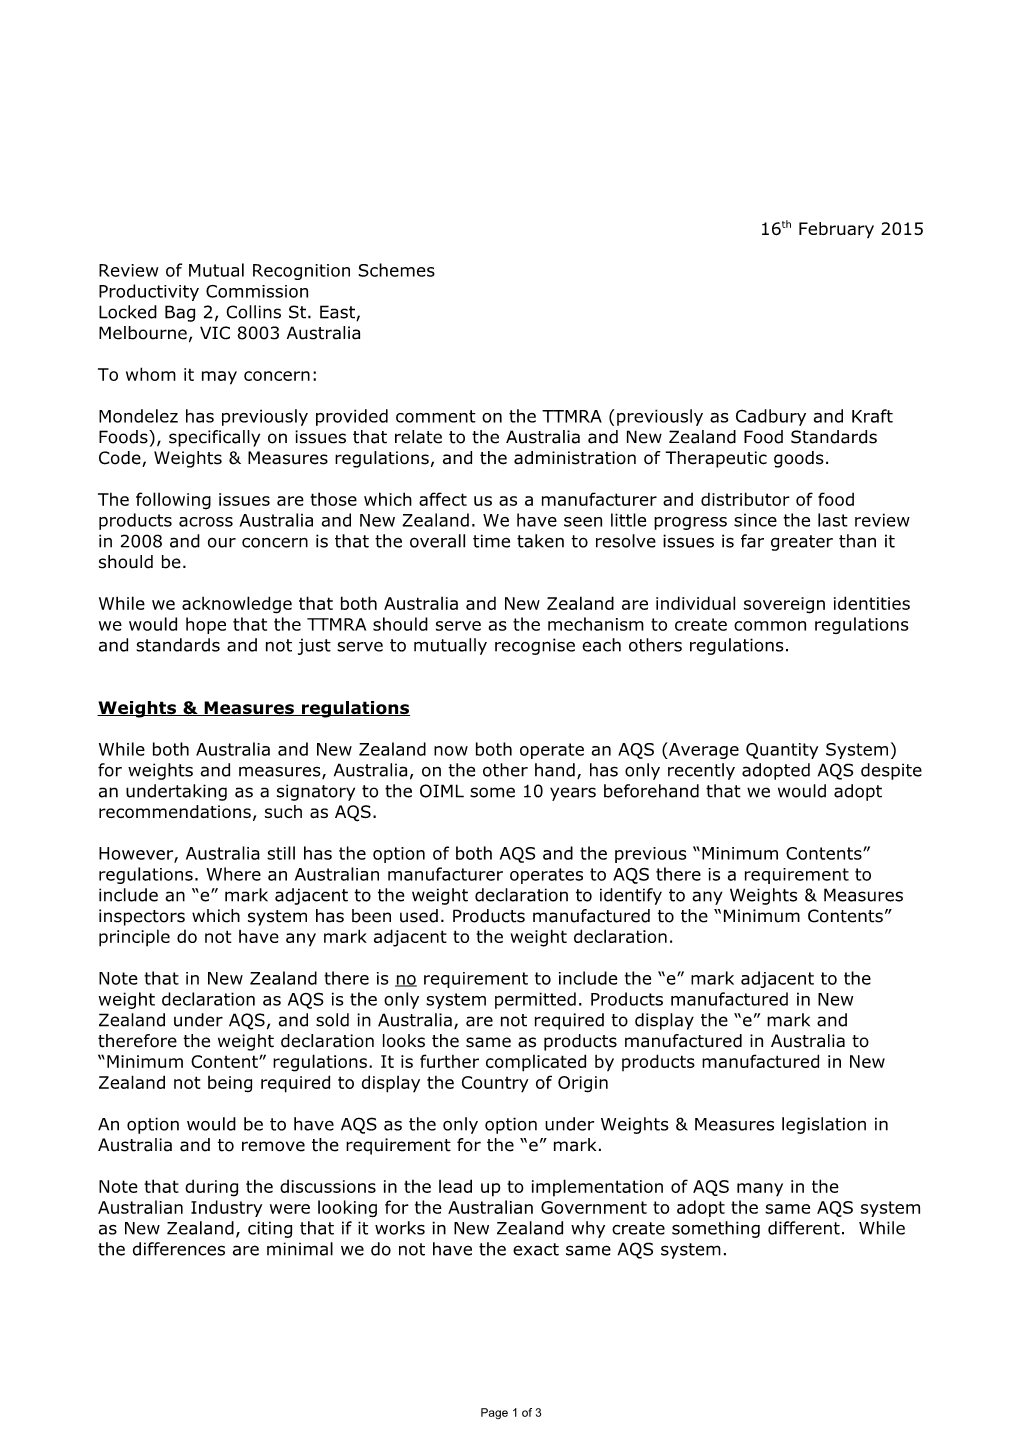 Submission 2 - Mondelez Australia - Mutual Recognition Schemes - Commissioned Study